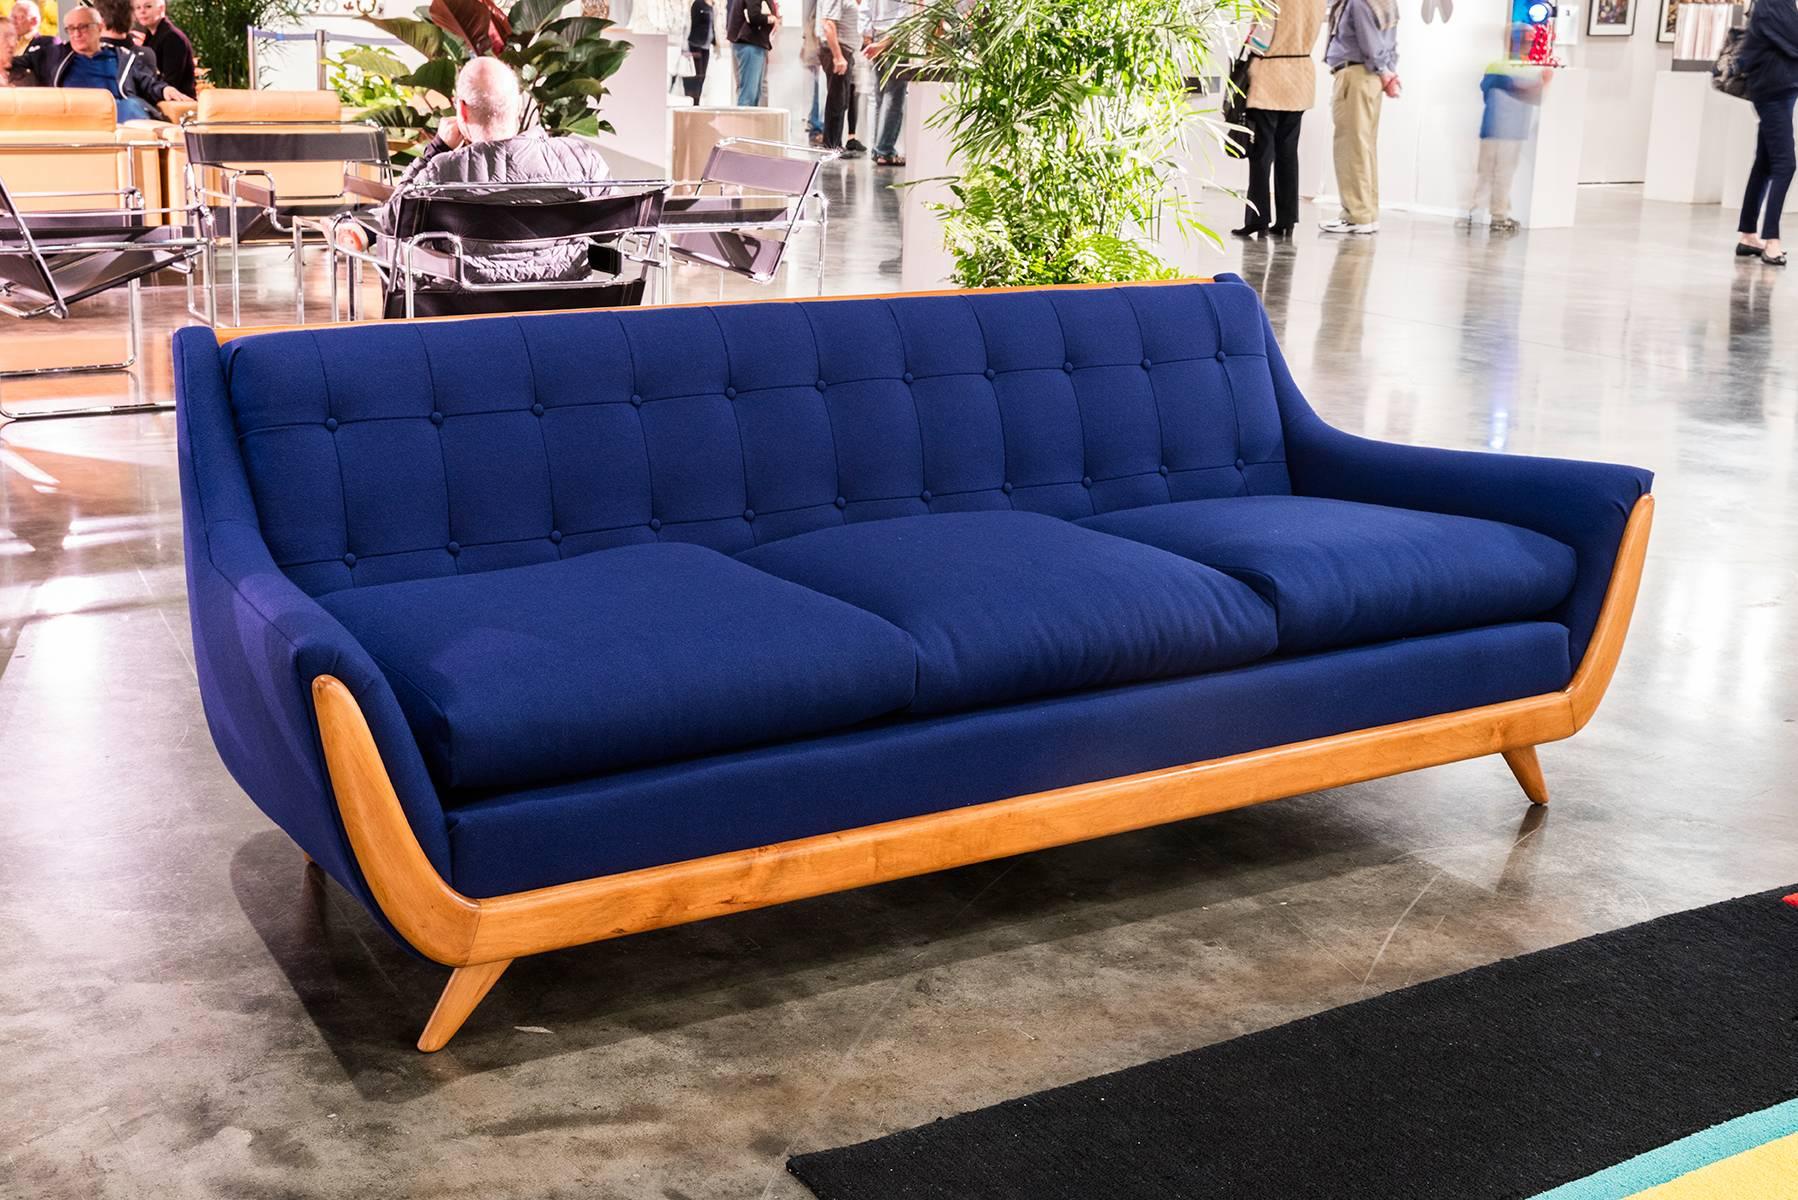 Beautiful reupholstered royal blue sofa with wood trim.